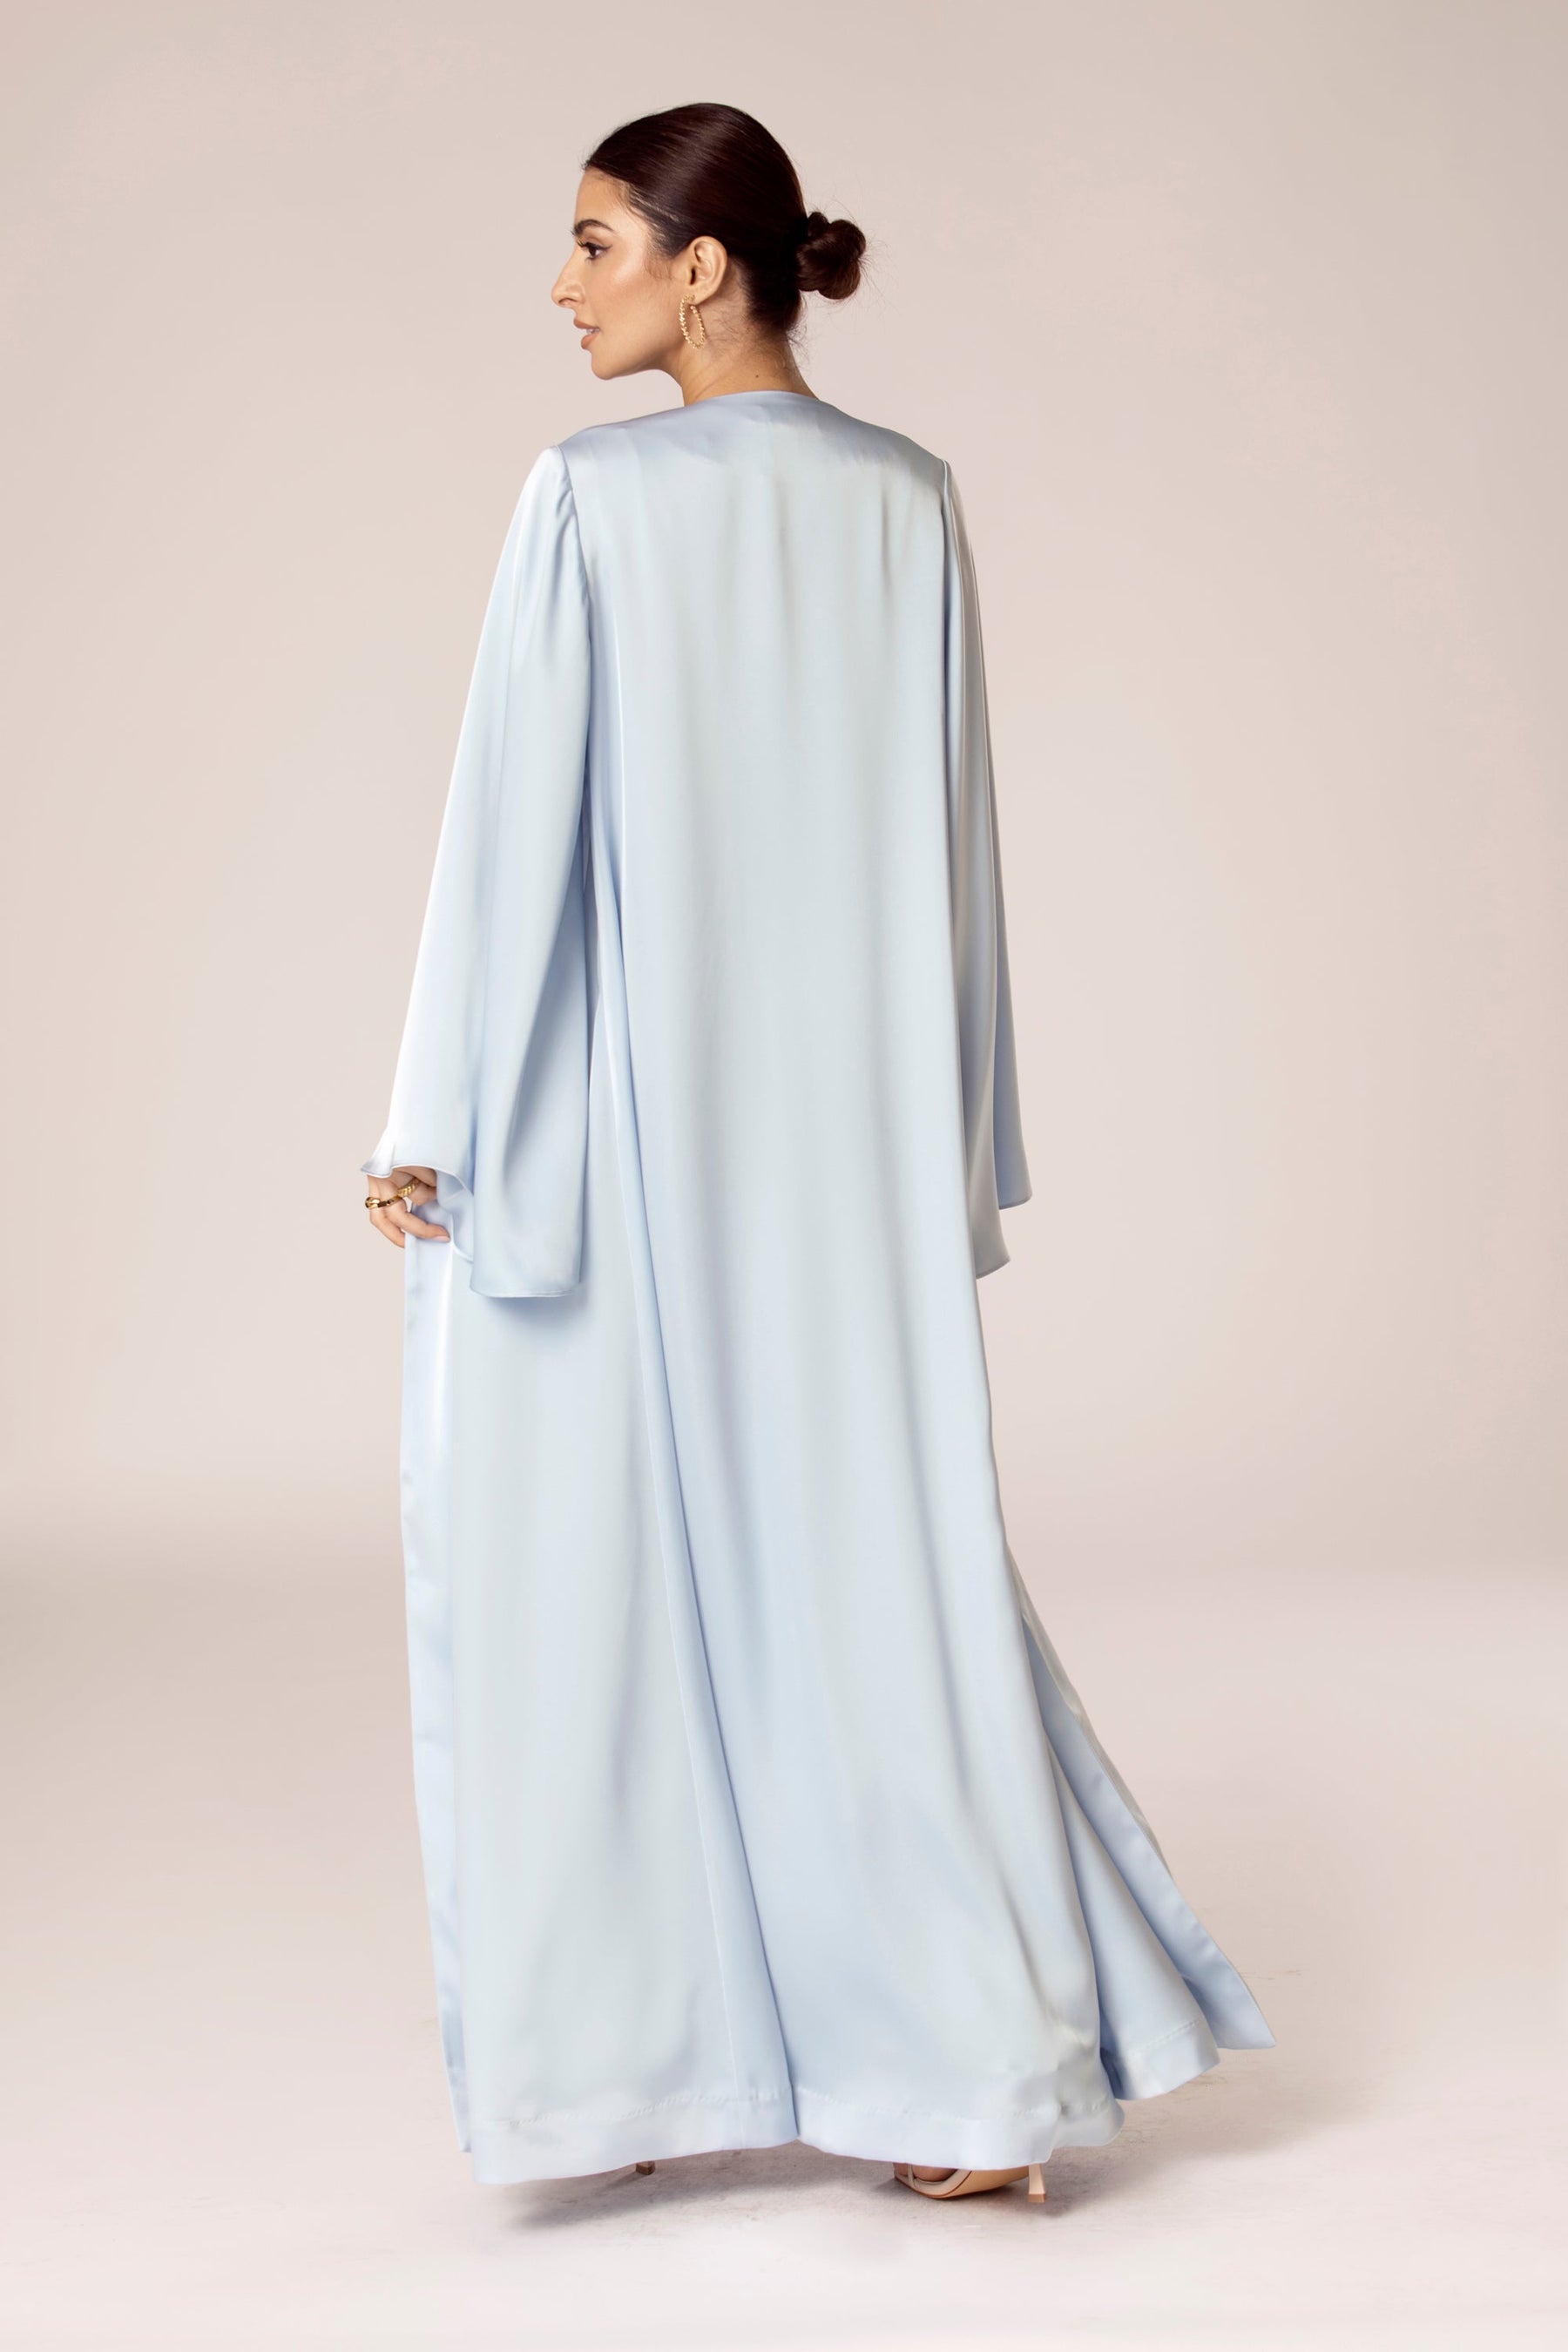 Powder Blue Bell Sleeve Satin Open Abaya Veiled Collection 